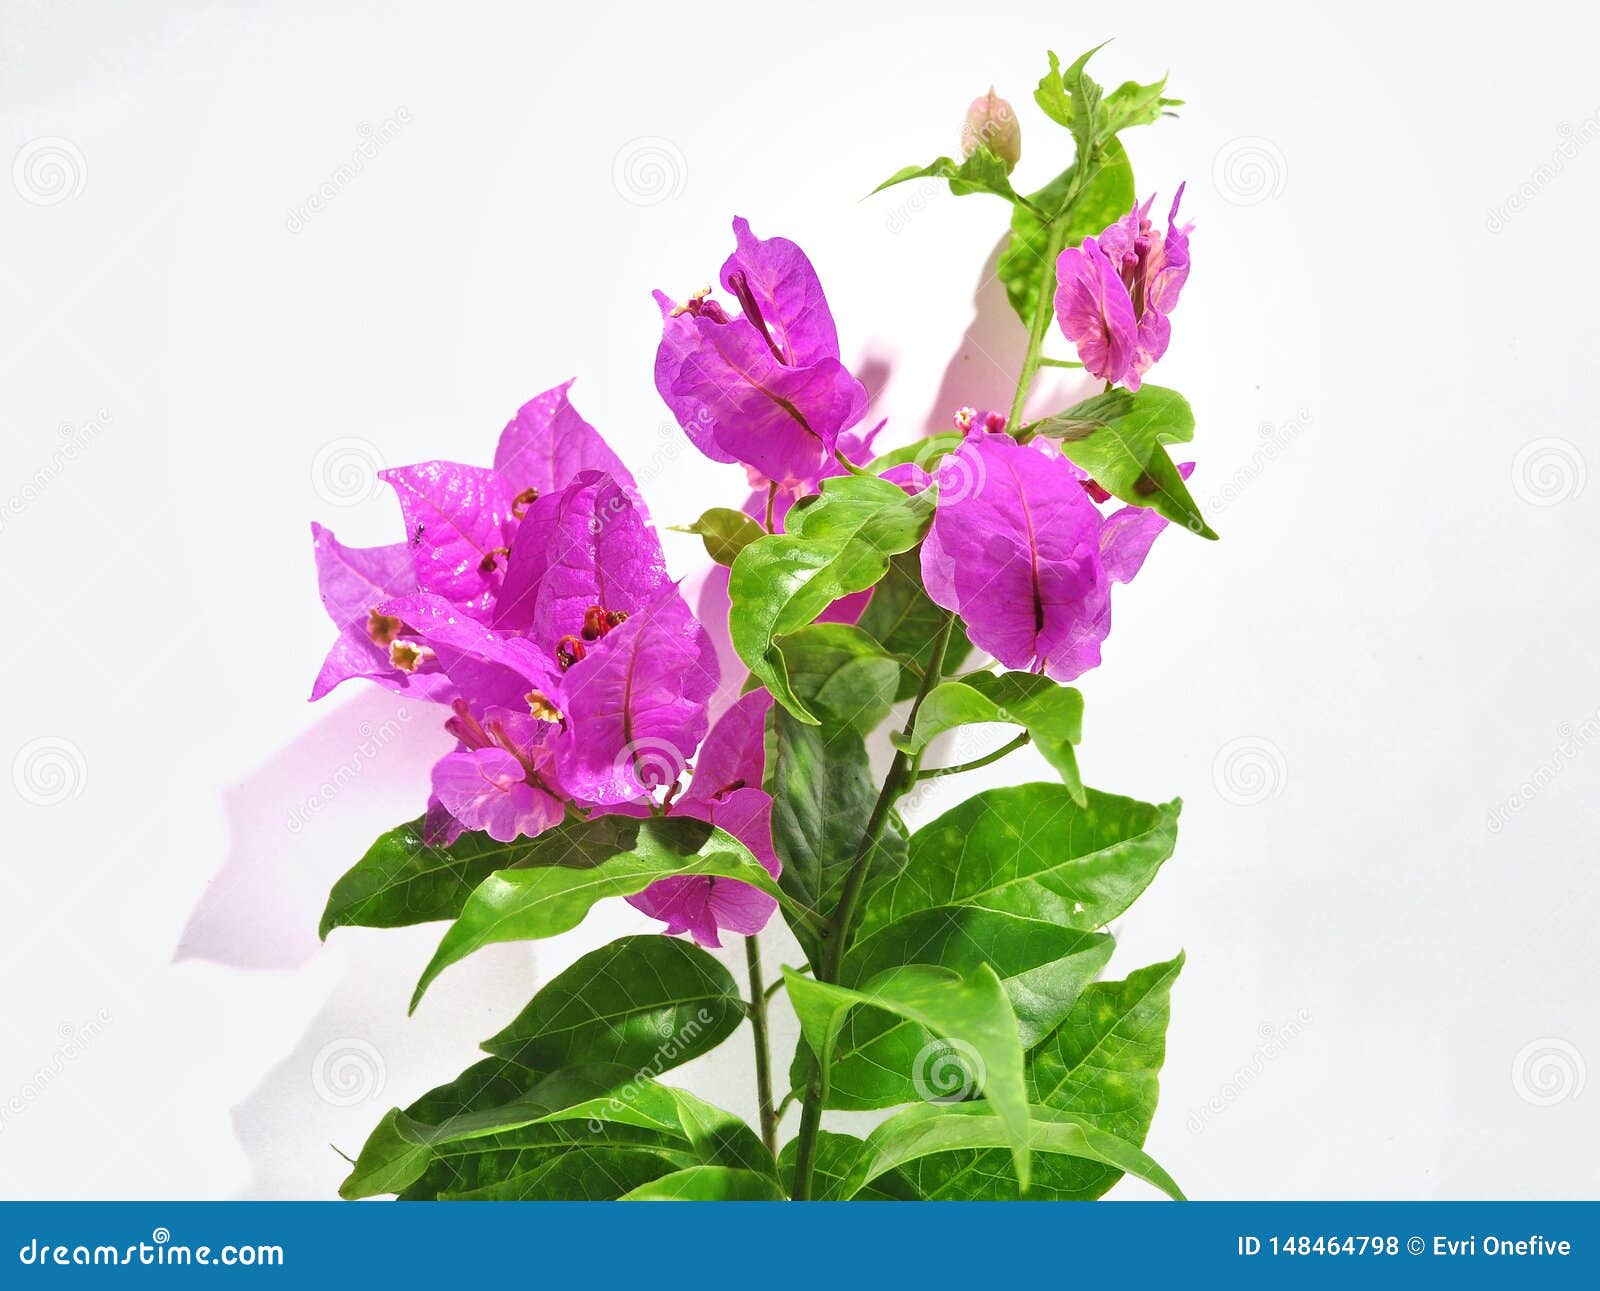 Bougainvillea Flowers Isolated On White Background Stock Photo - Image ...